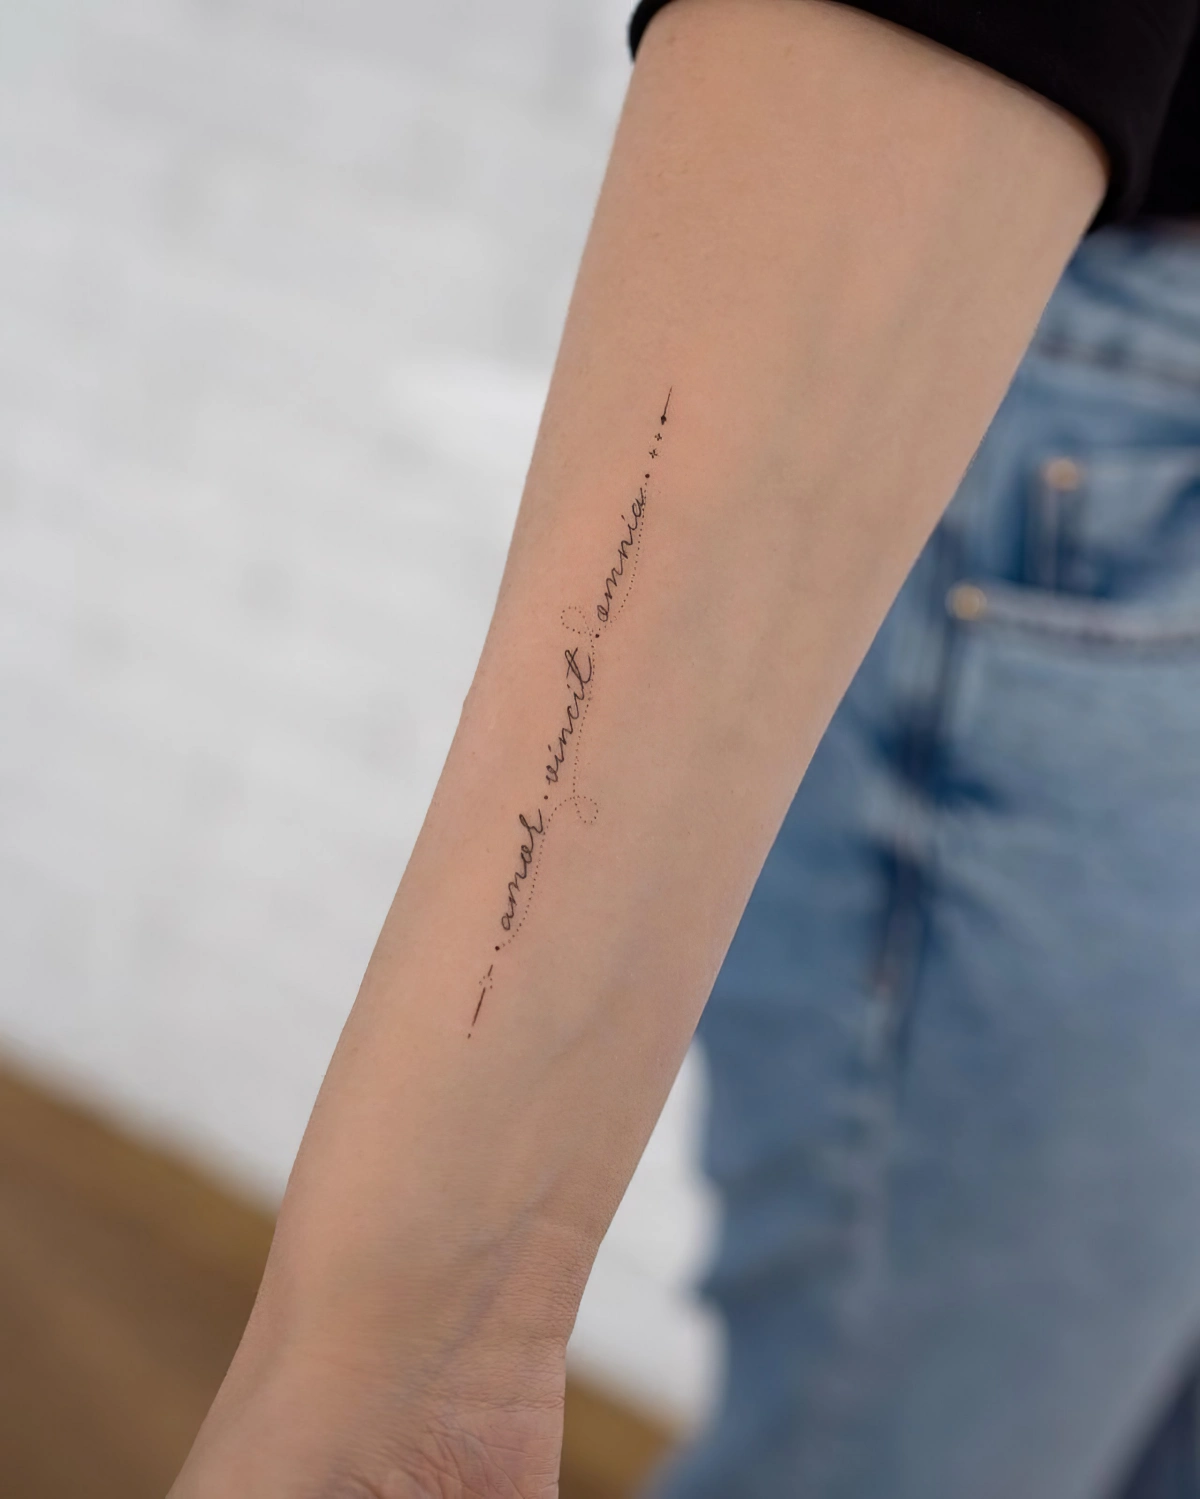 tatouage phrase bras femme discret motif mantra lettres fines